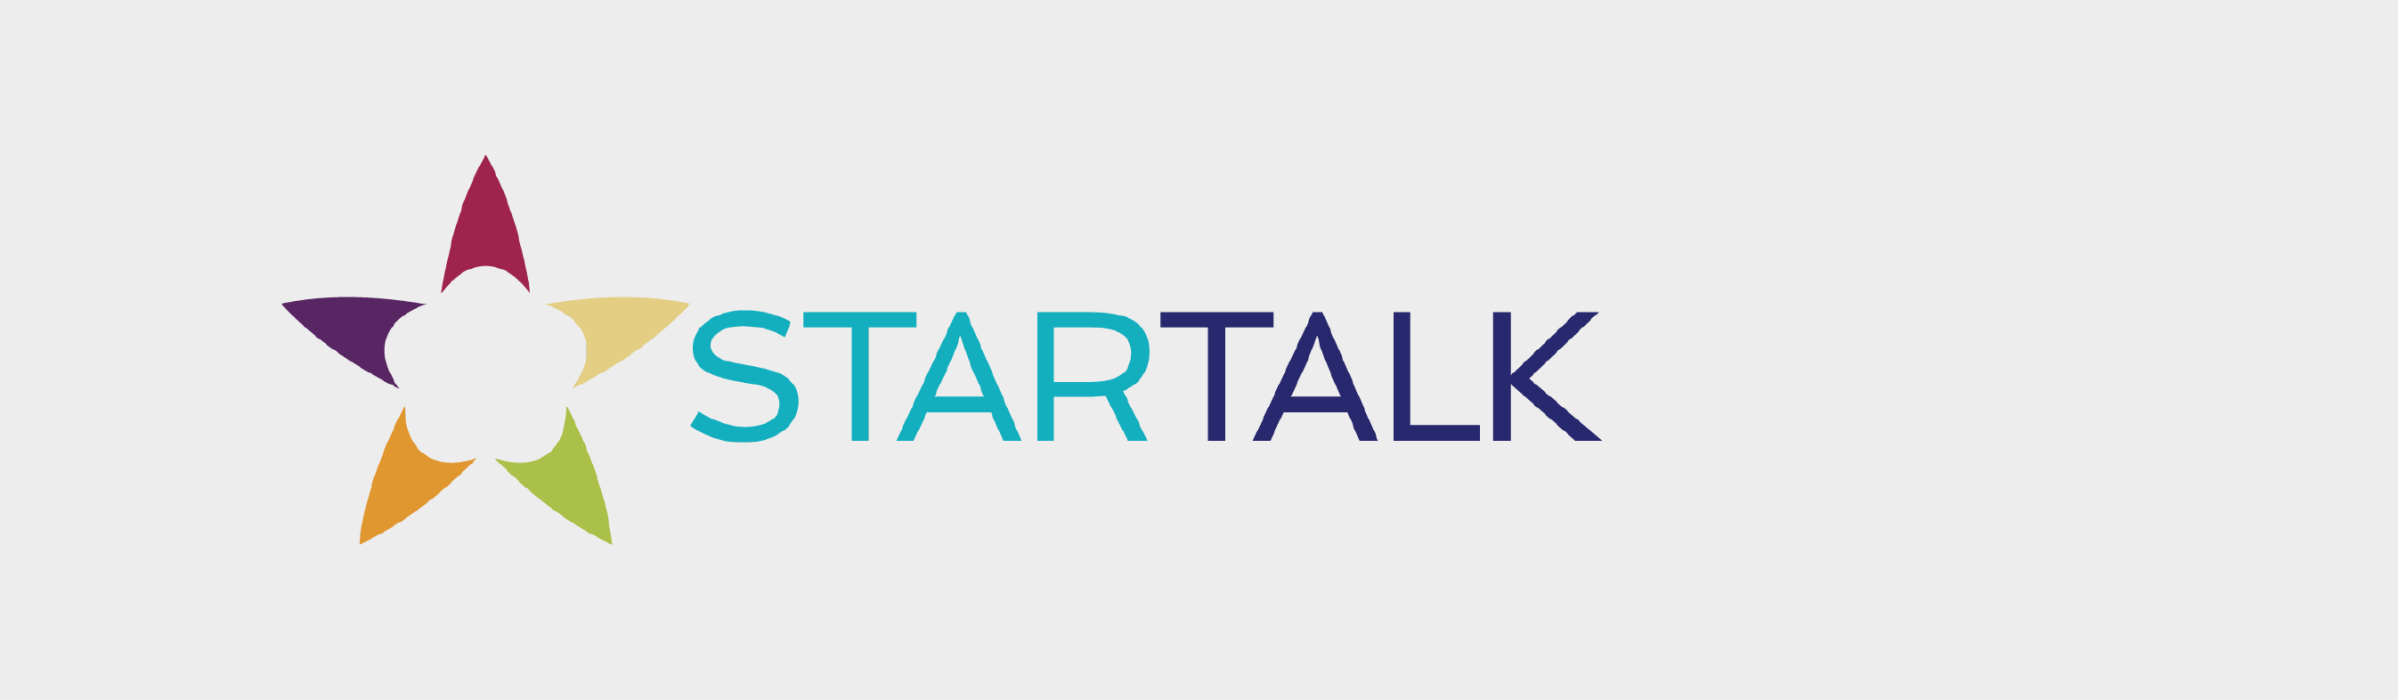 STARTALK logo